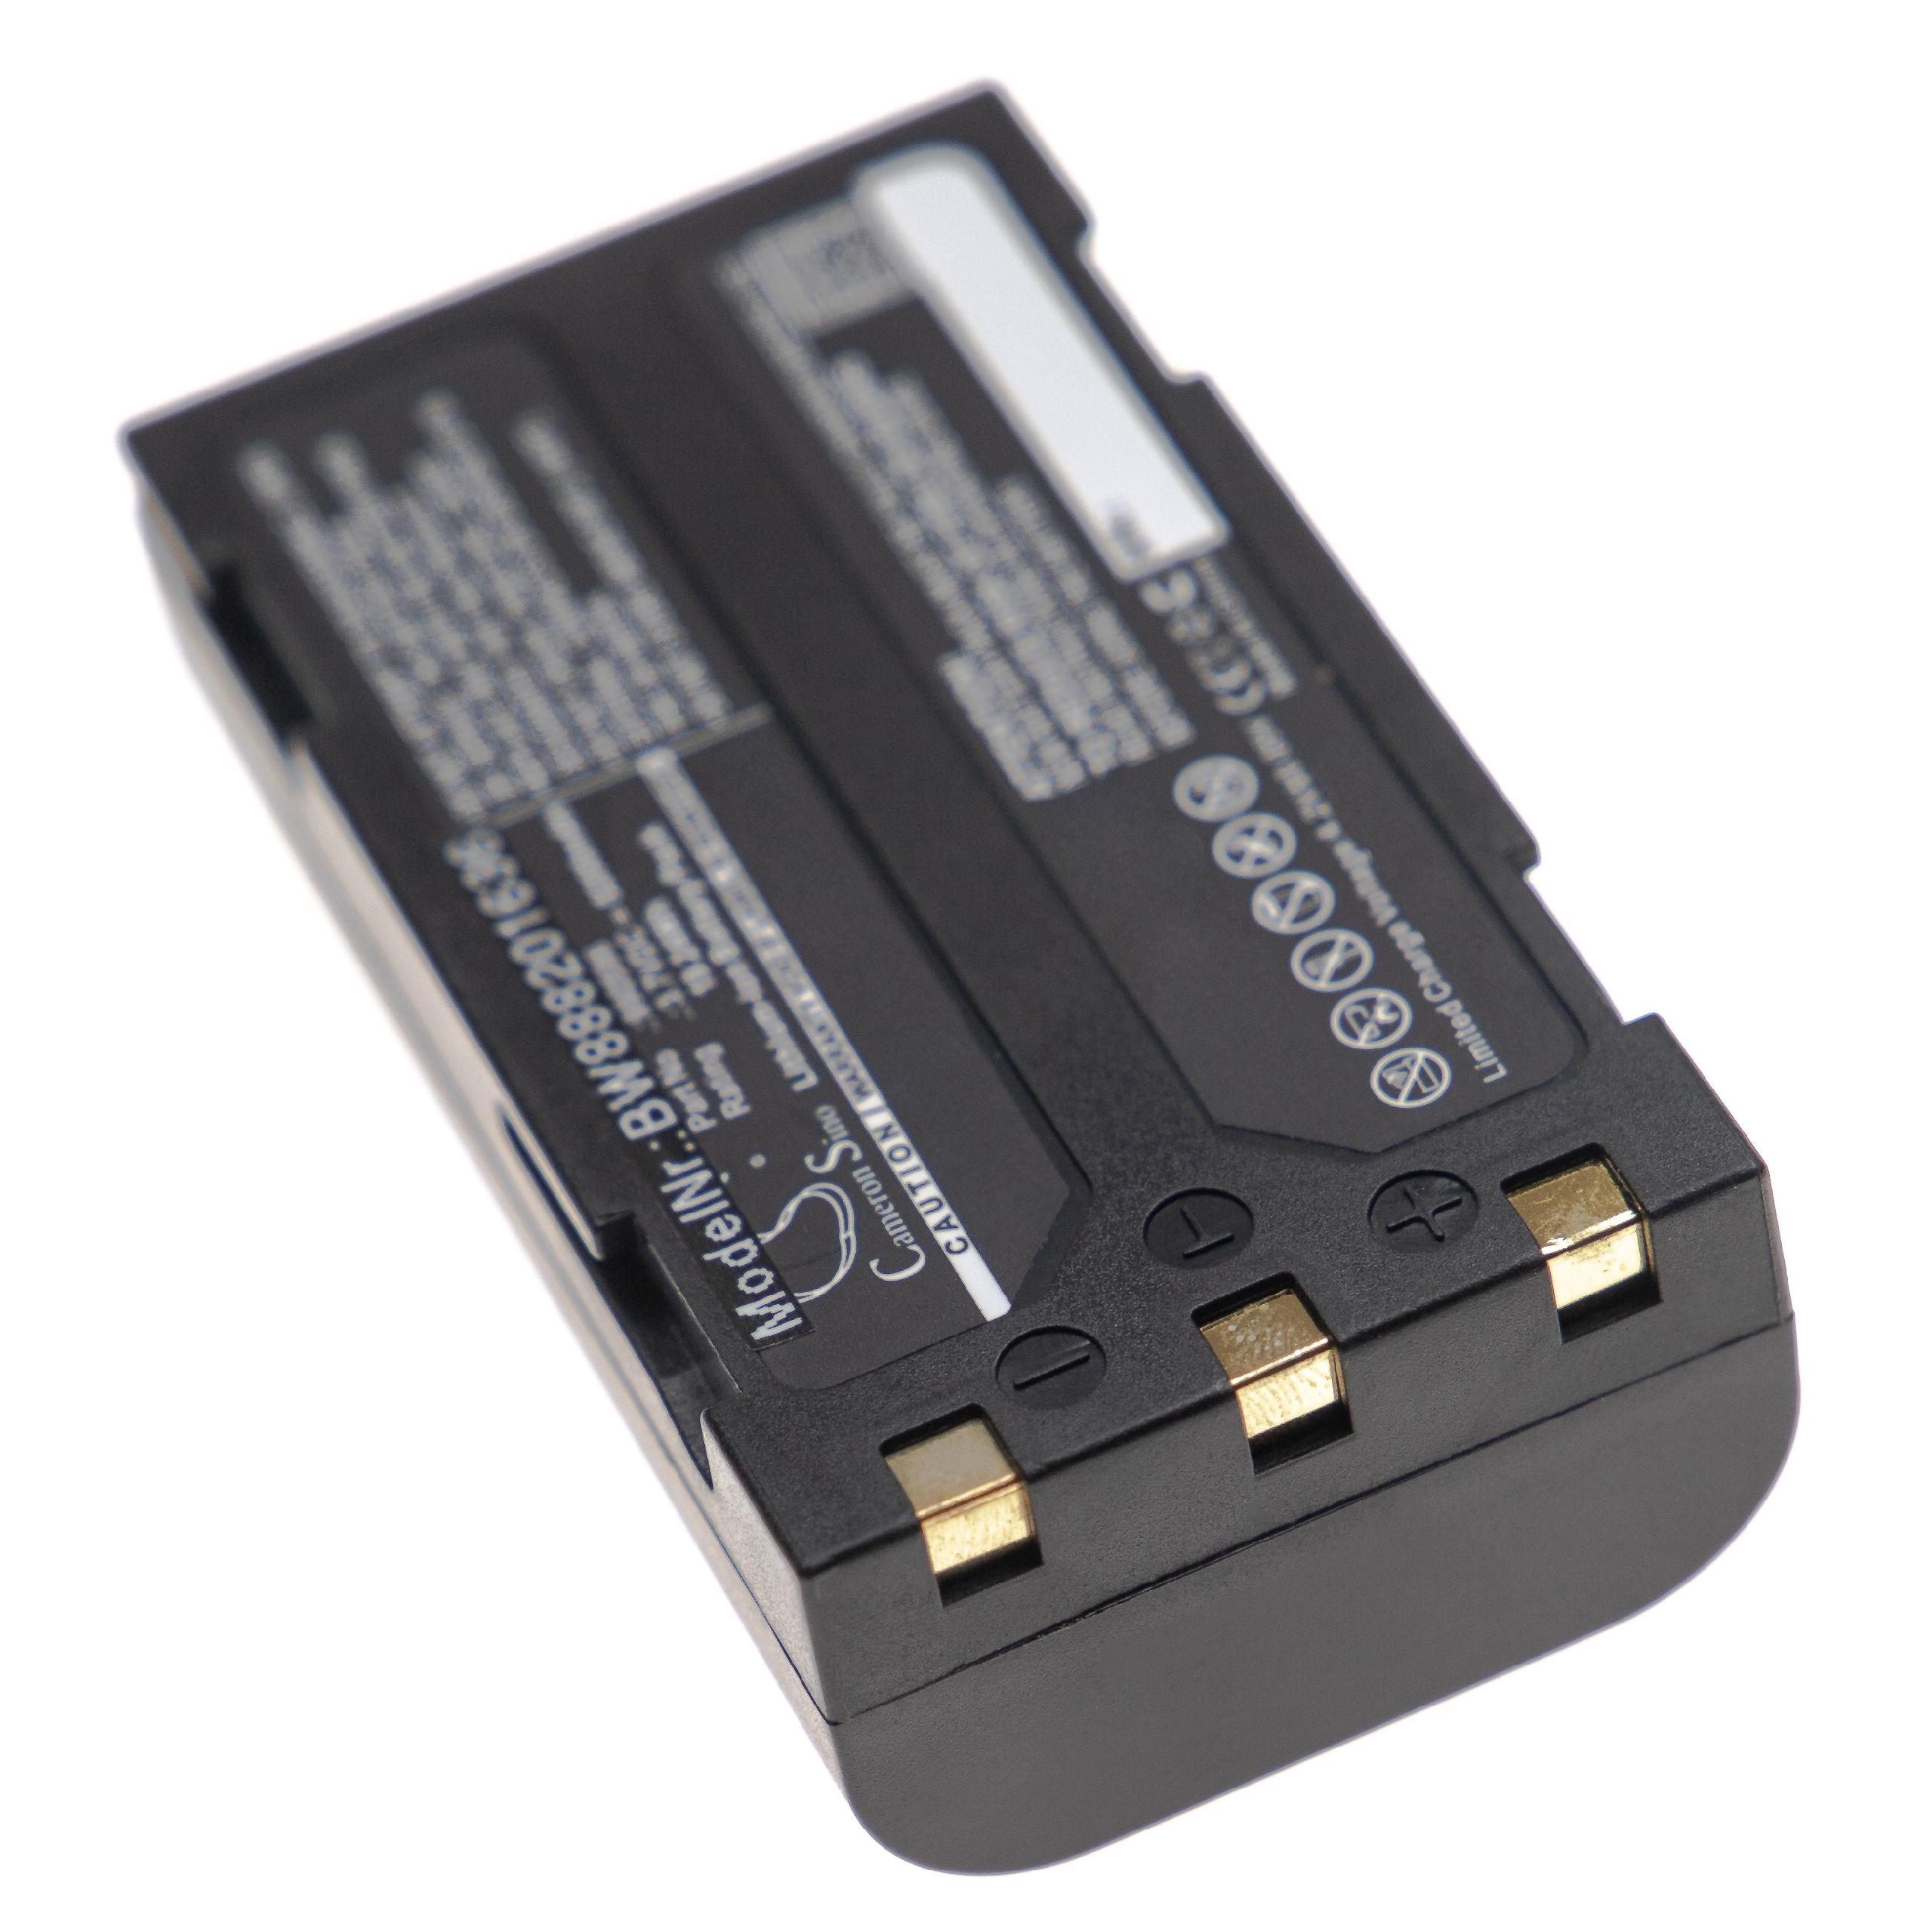 Laser Battery Replacement for Ridgid 990596, 990514 - 5200mAh 3.7V Li-Ion